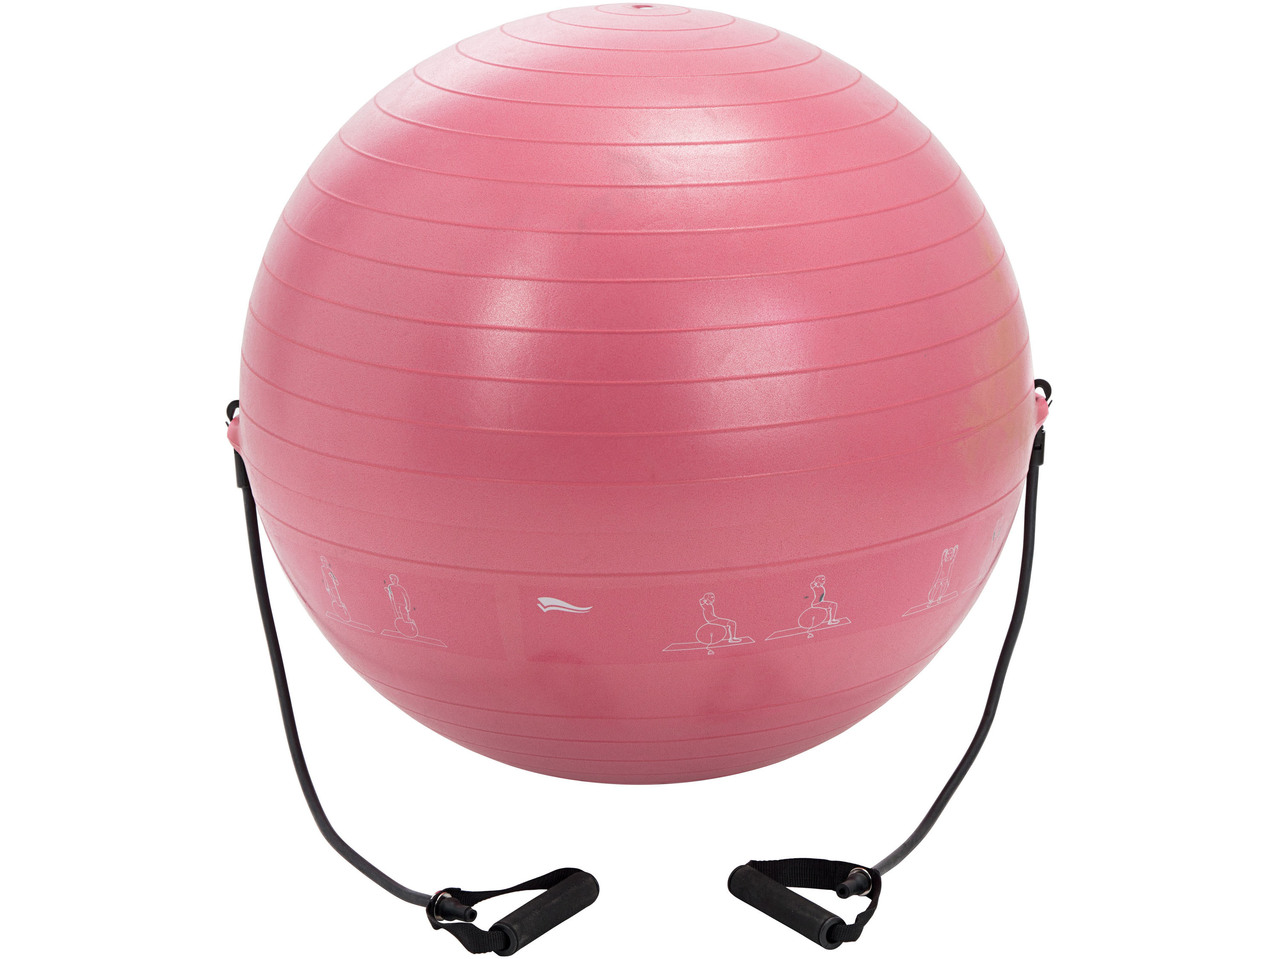 Soft Exercise Ball or Soft Massage Exercise Ball